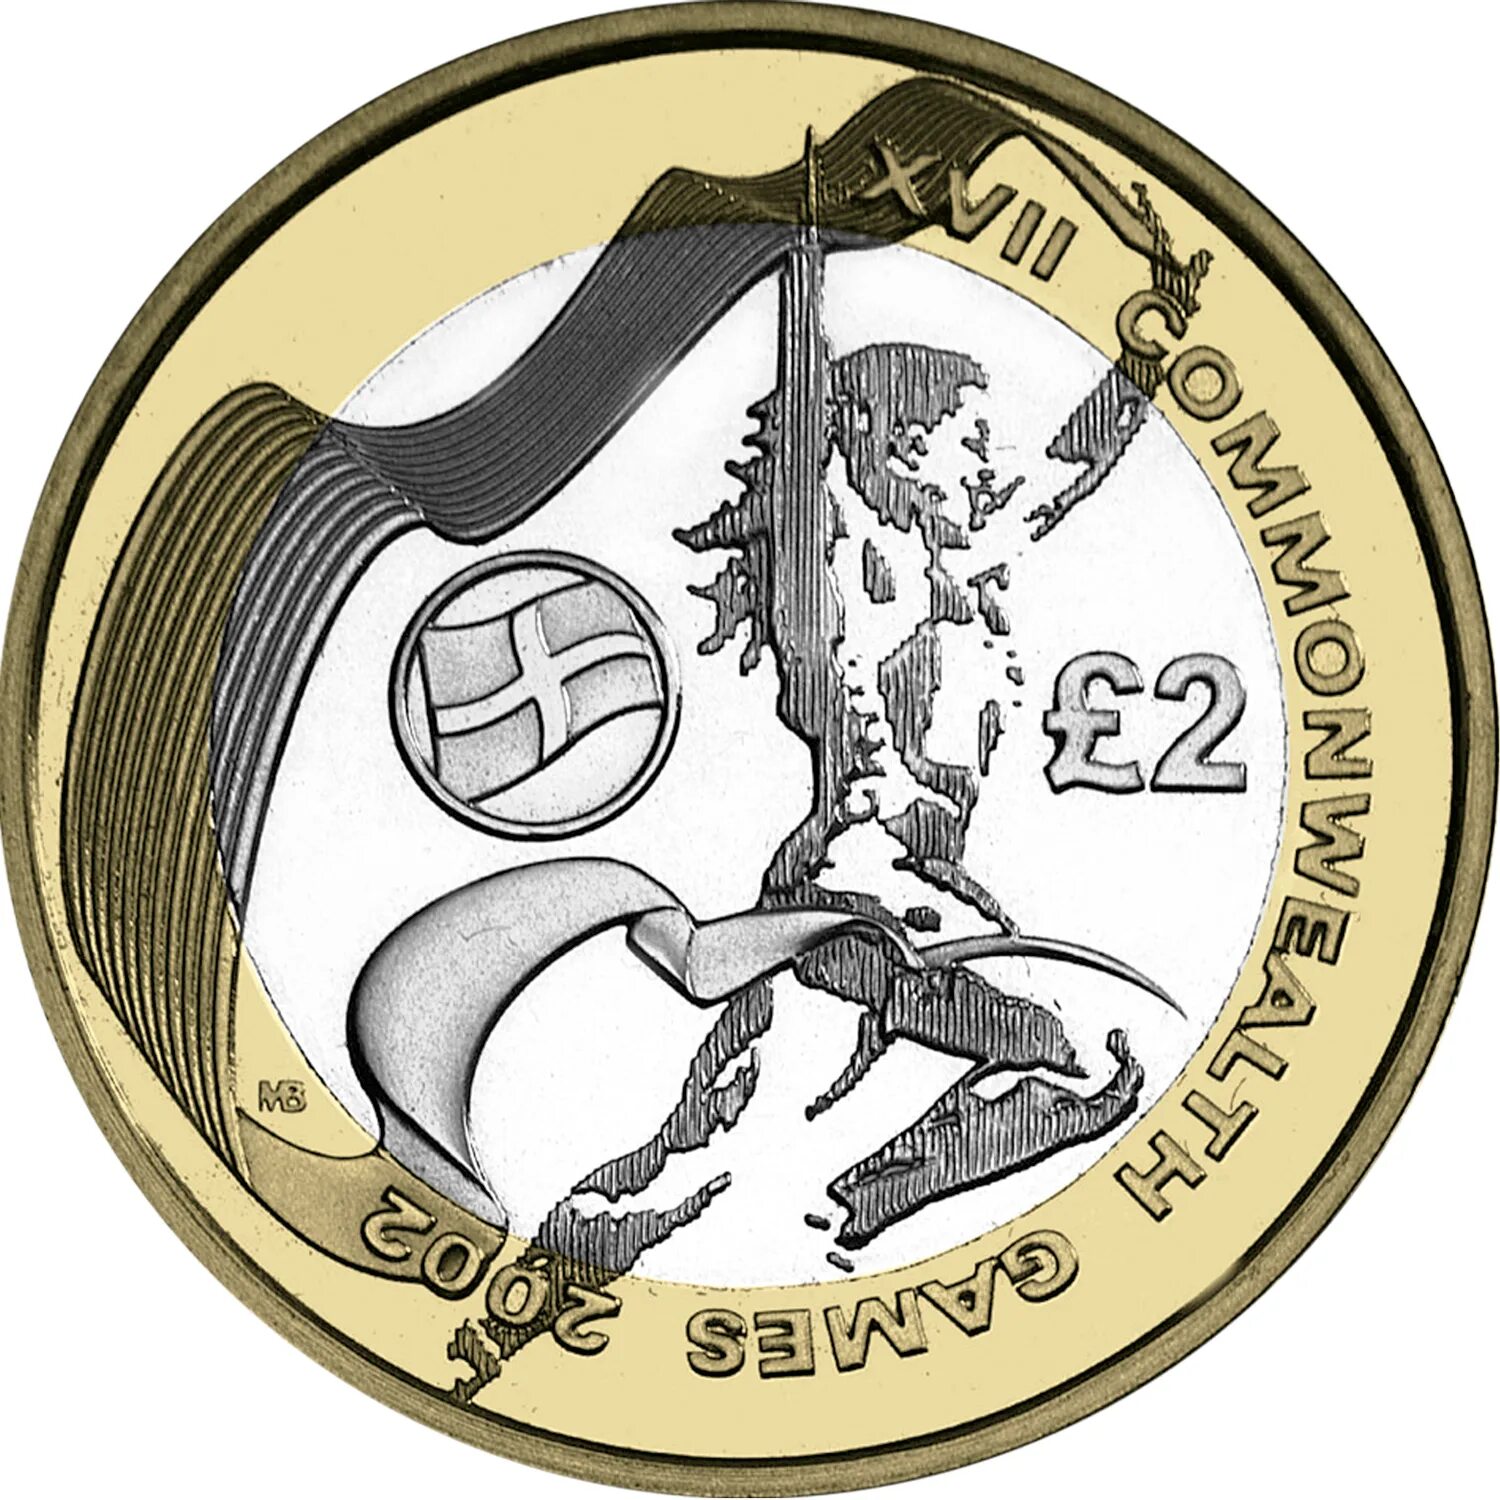 Two coins. Монета 2 фунта Великобритания. Монета 2 фунта Великобритания 2015 год. Монета 2 фунта 2002 года Уэльс. Монета 2 фунта Великобритания 2002.